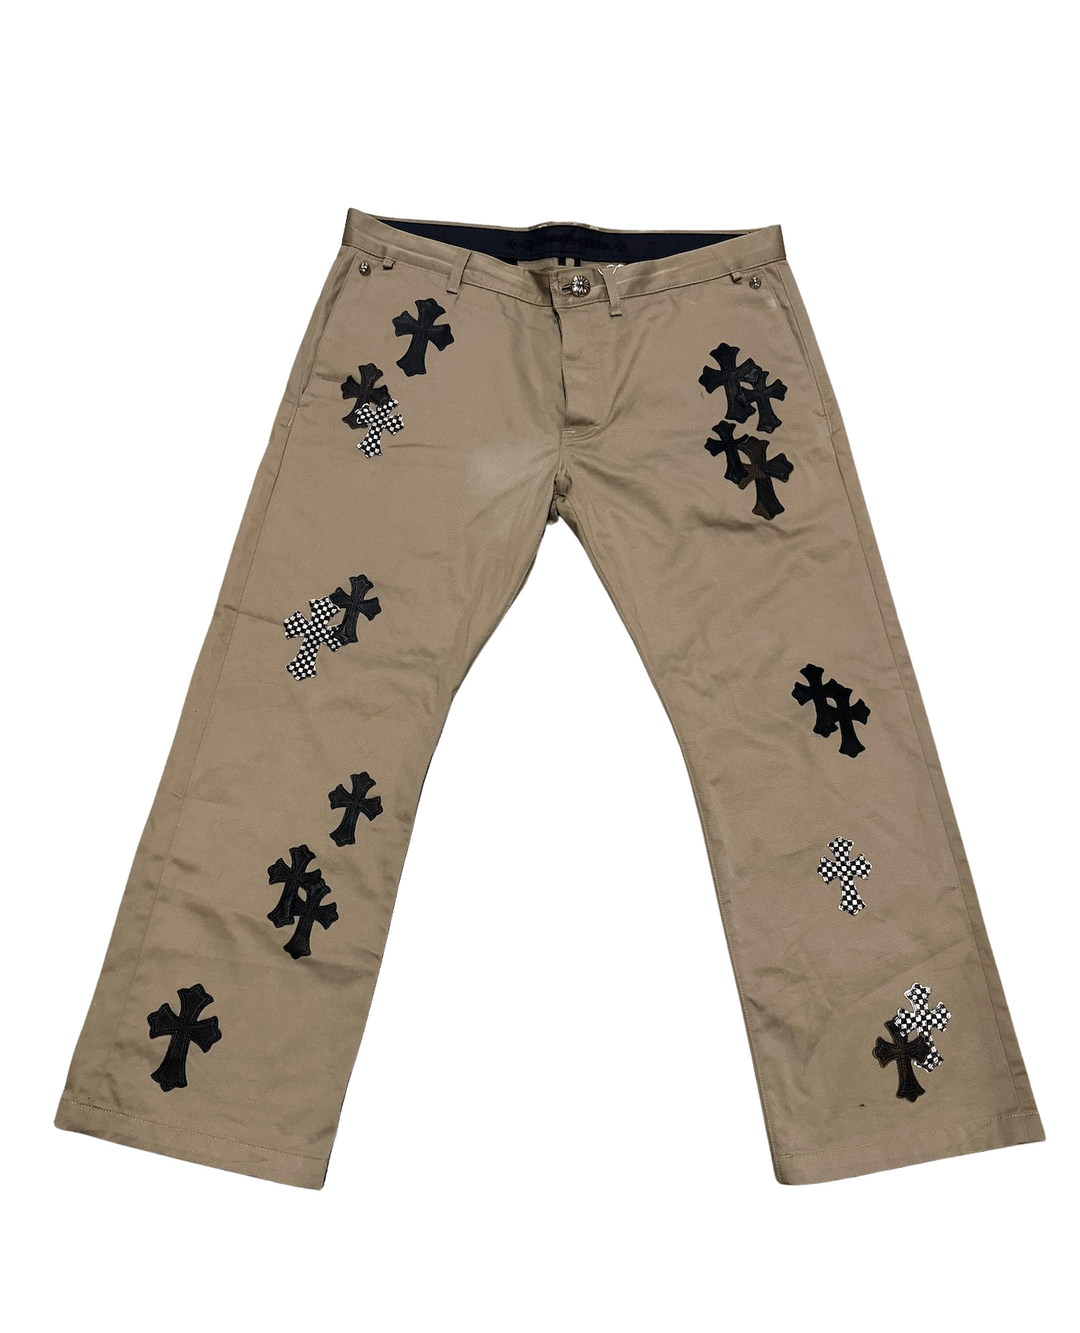 Chrome Hearts '40 Crosses' Tan Carpenter Pants